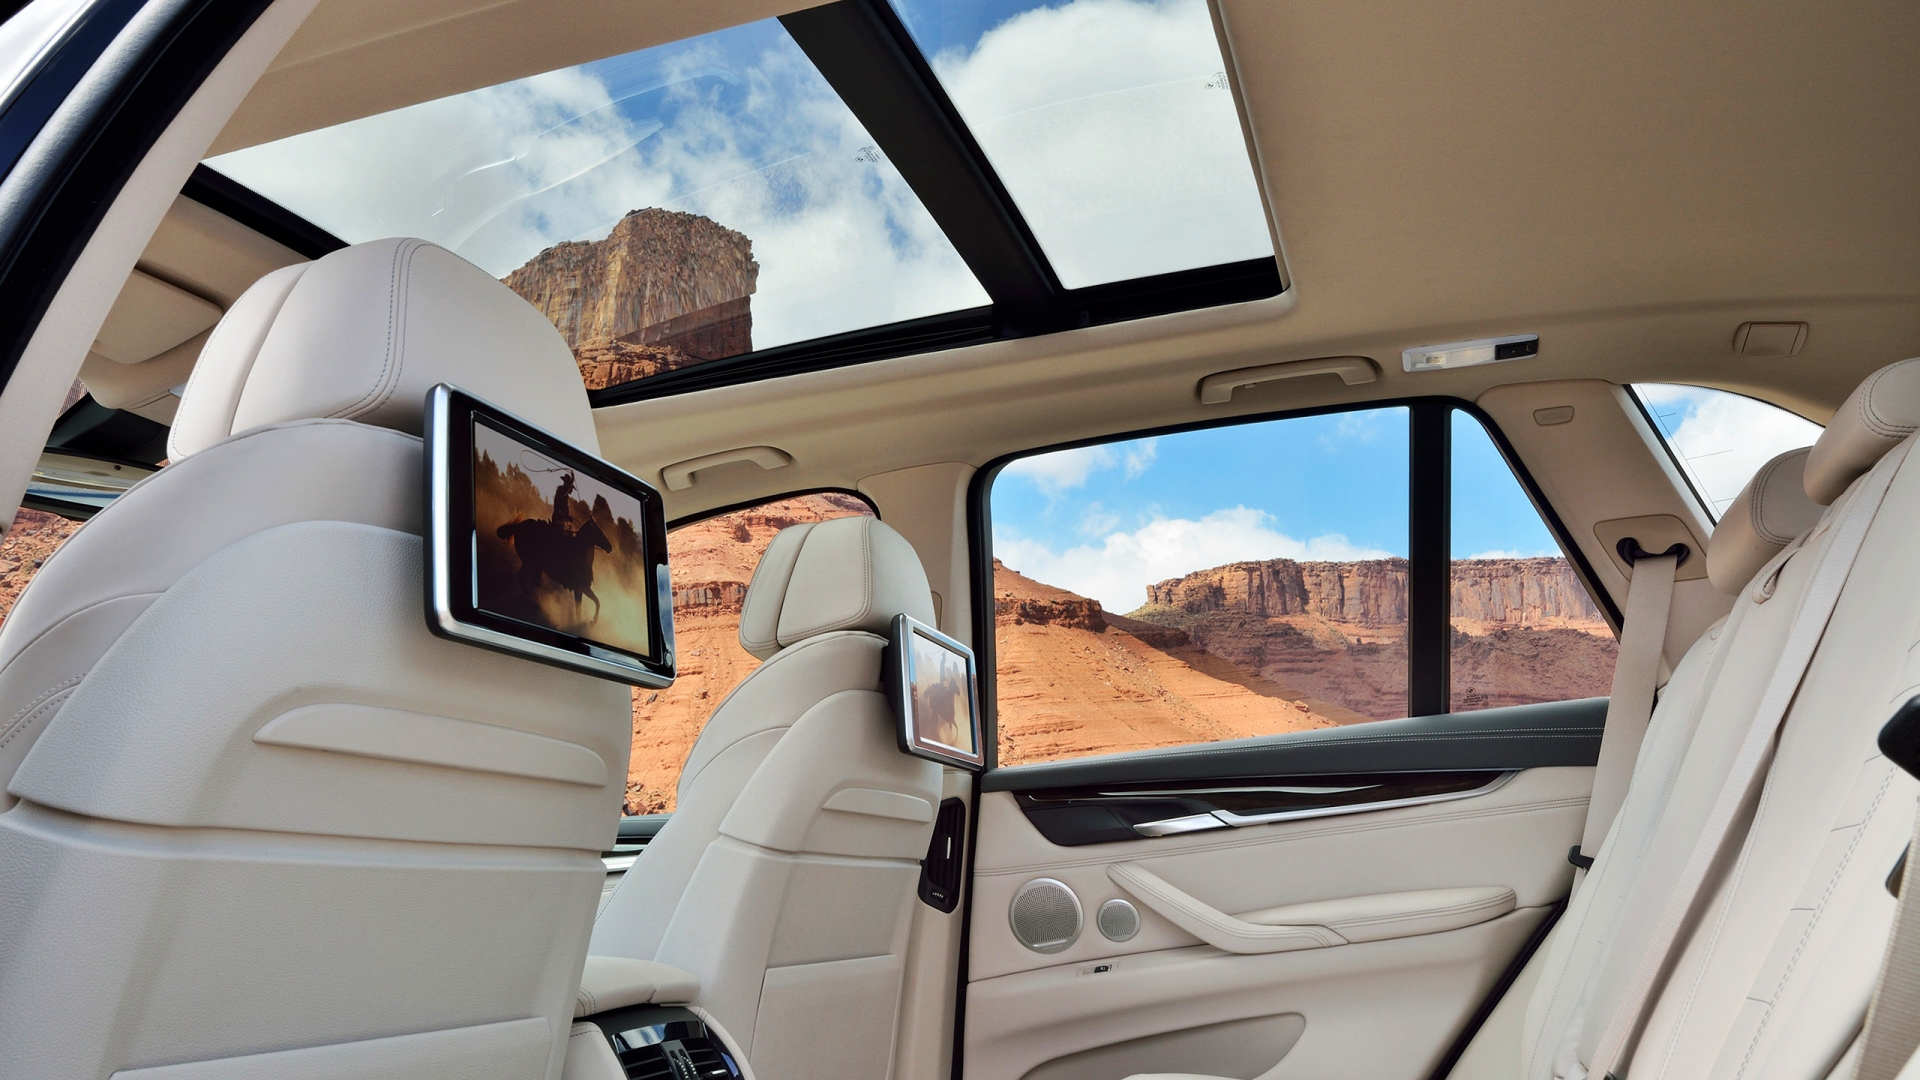 2014 BMW X5 Interior for 1920 x 1080 HDTV 1080p resolution